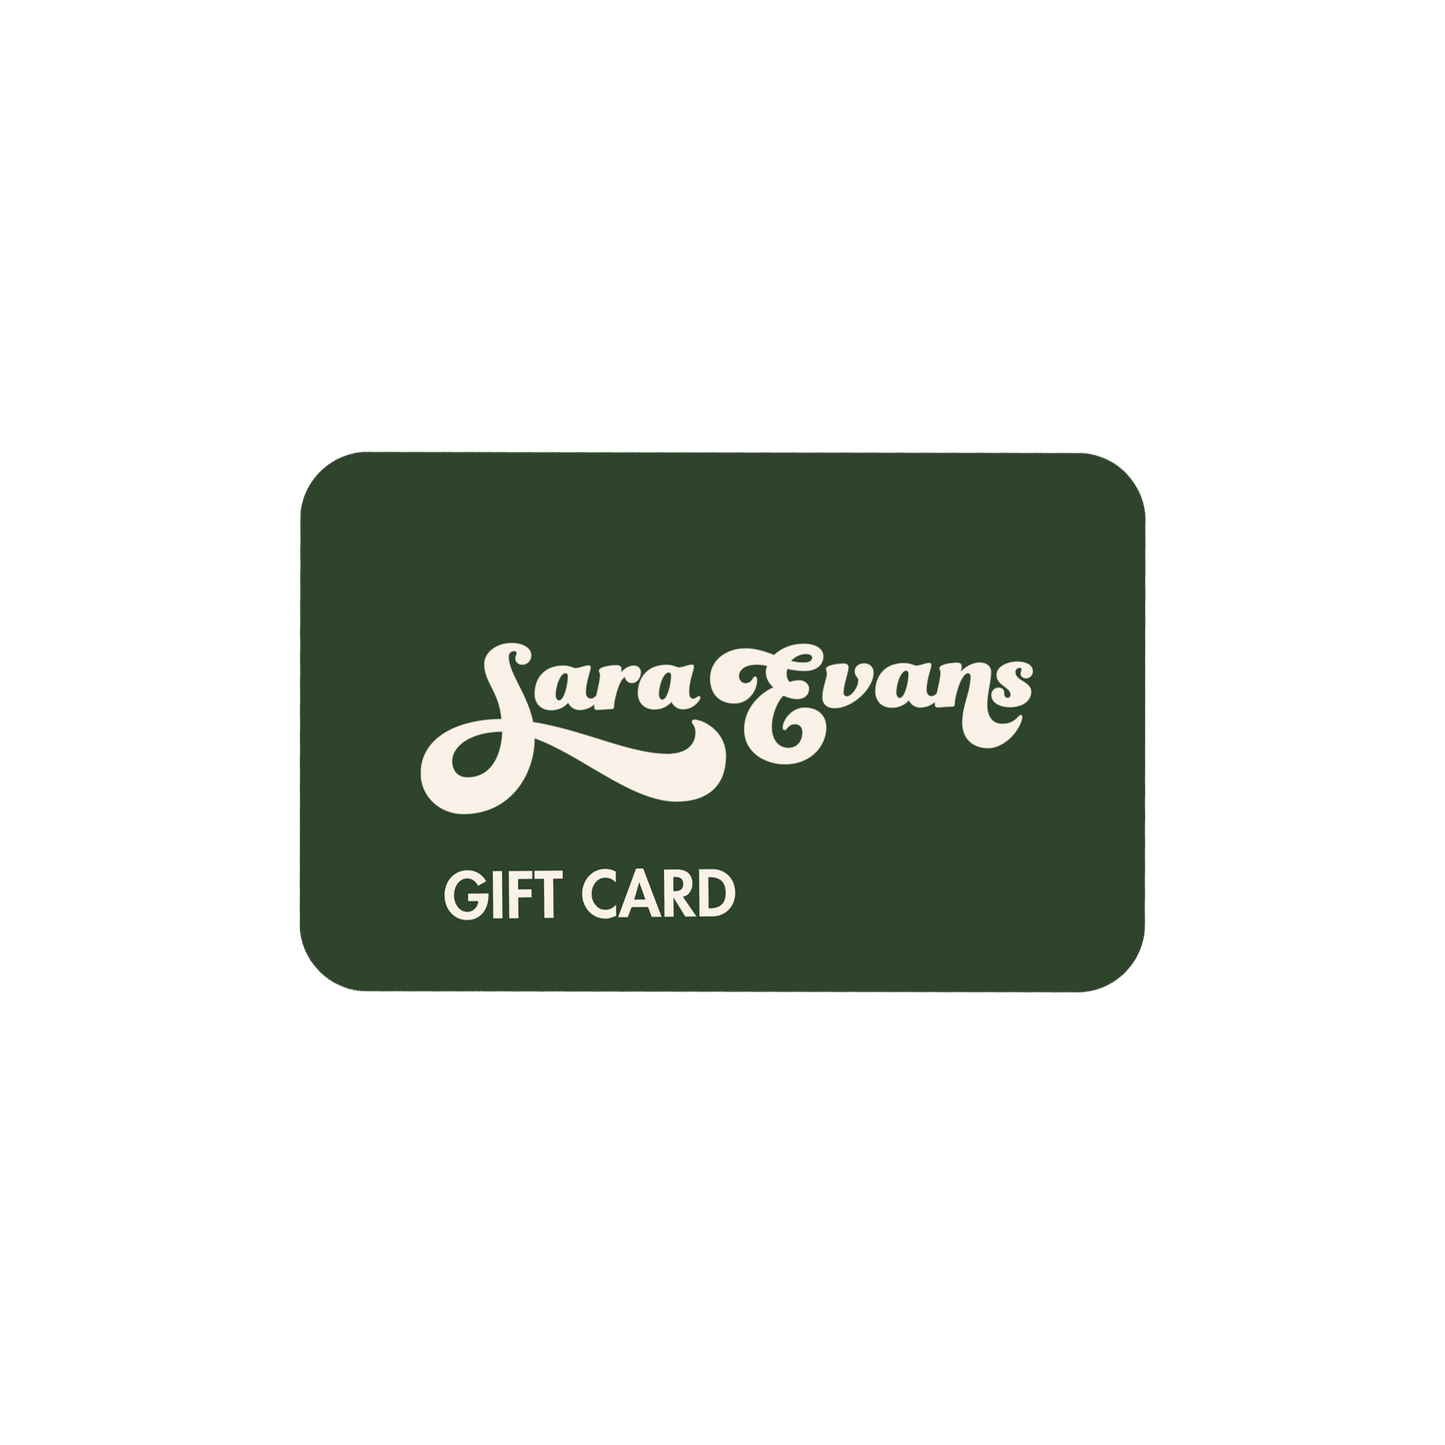 Sara Evans Store Gift Card